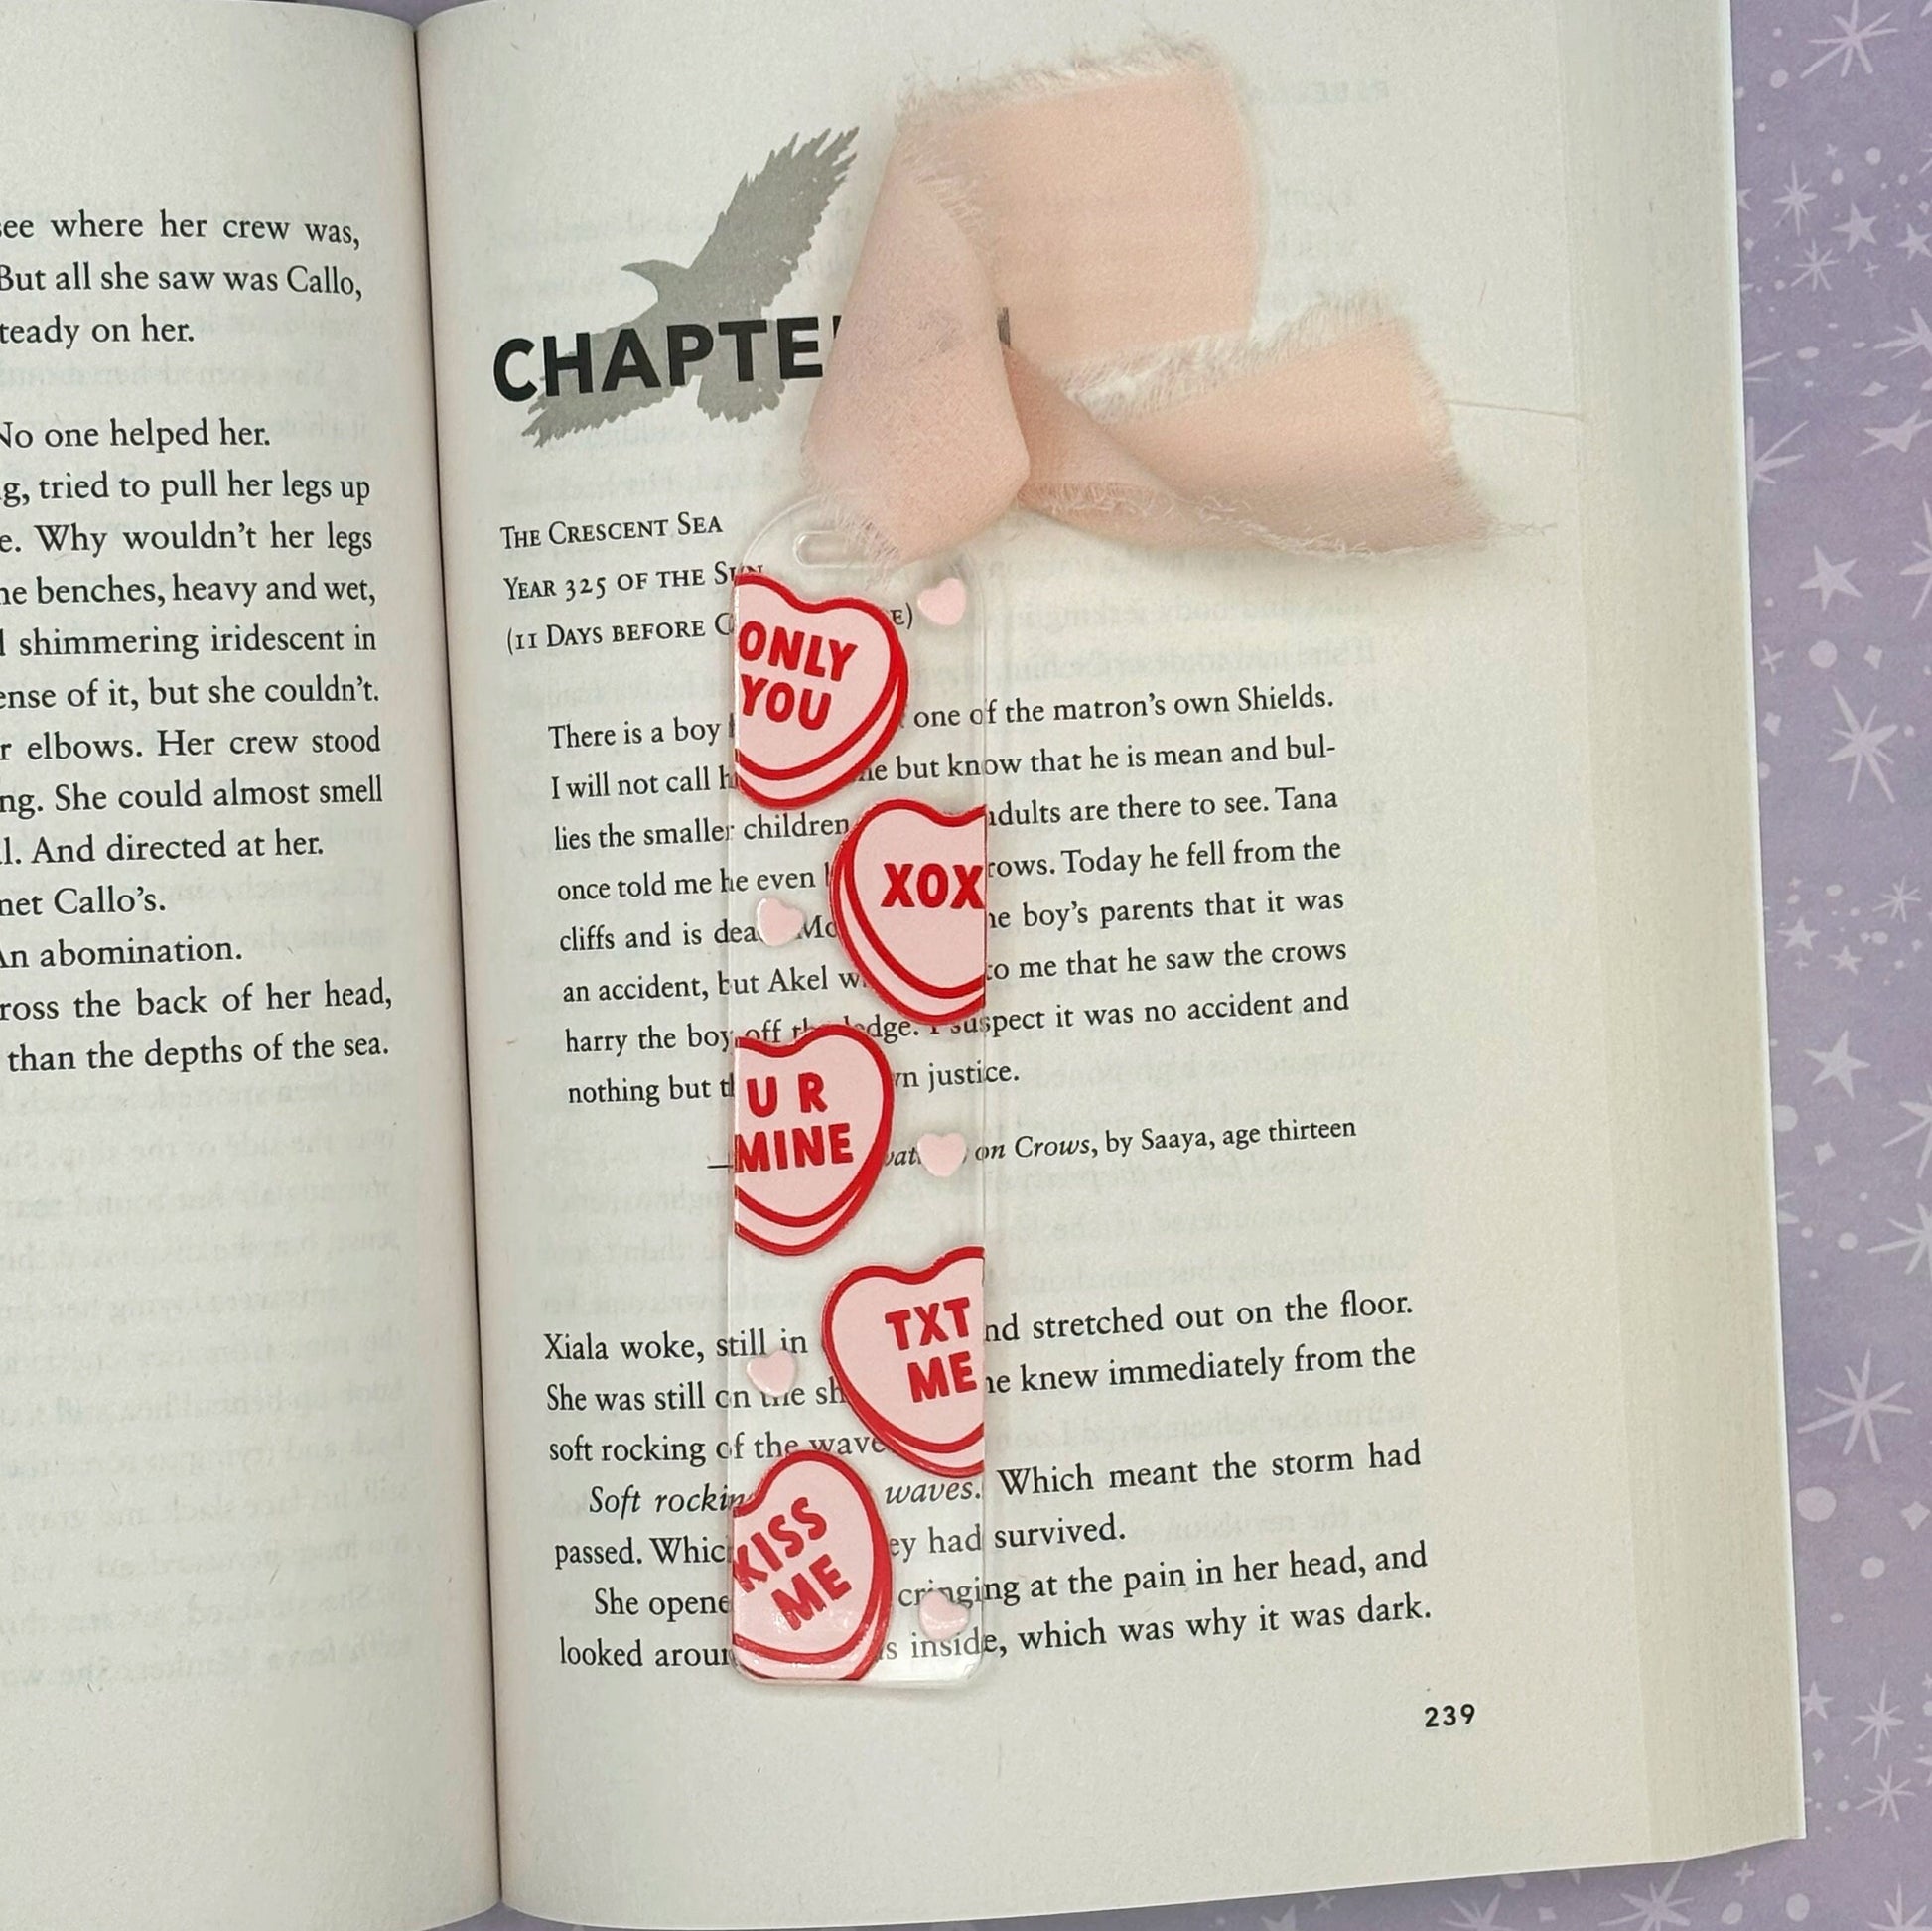 Word Hearts Valentine's Day Cute Acrylic Bookmark with Chiffon Ribbon